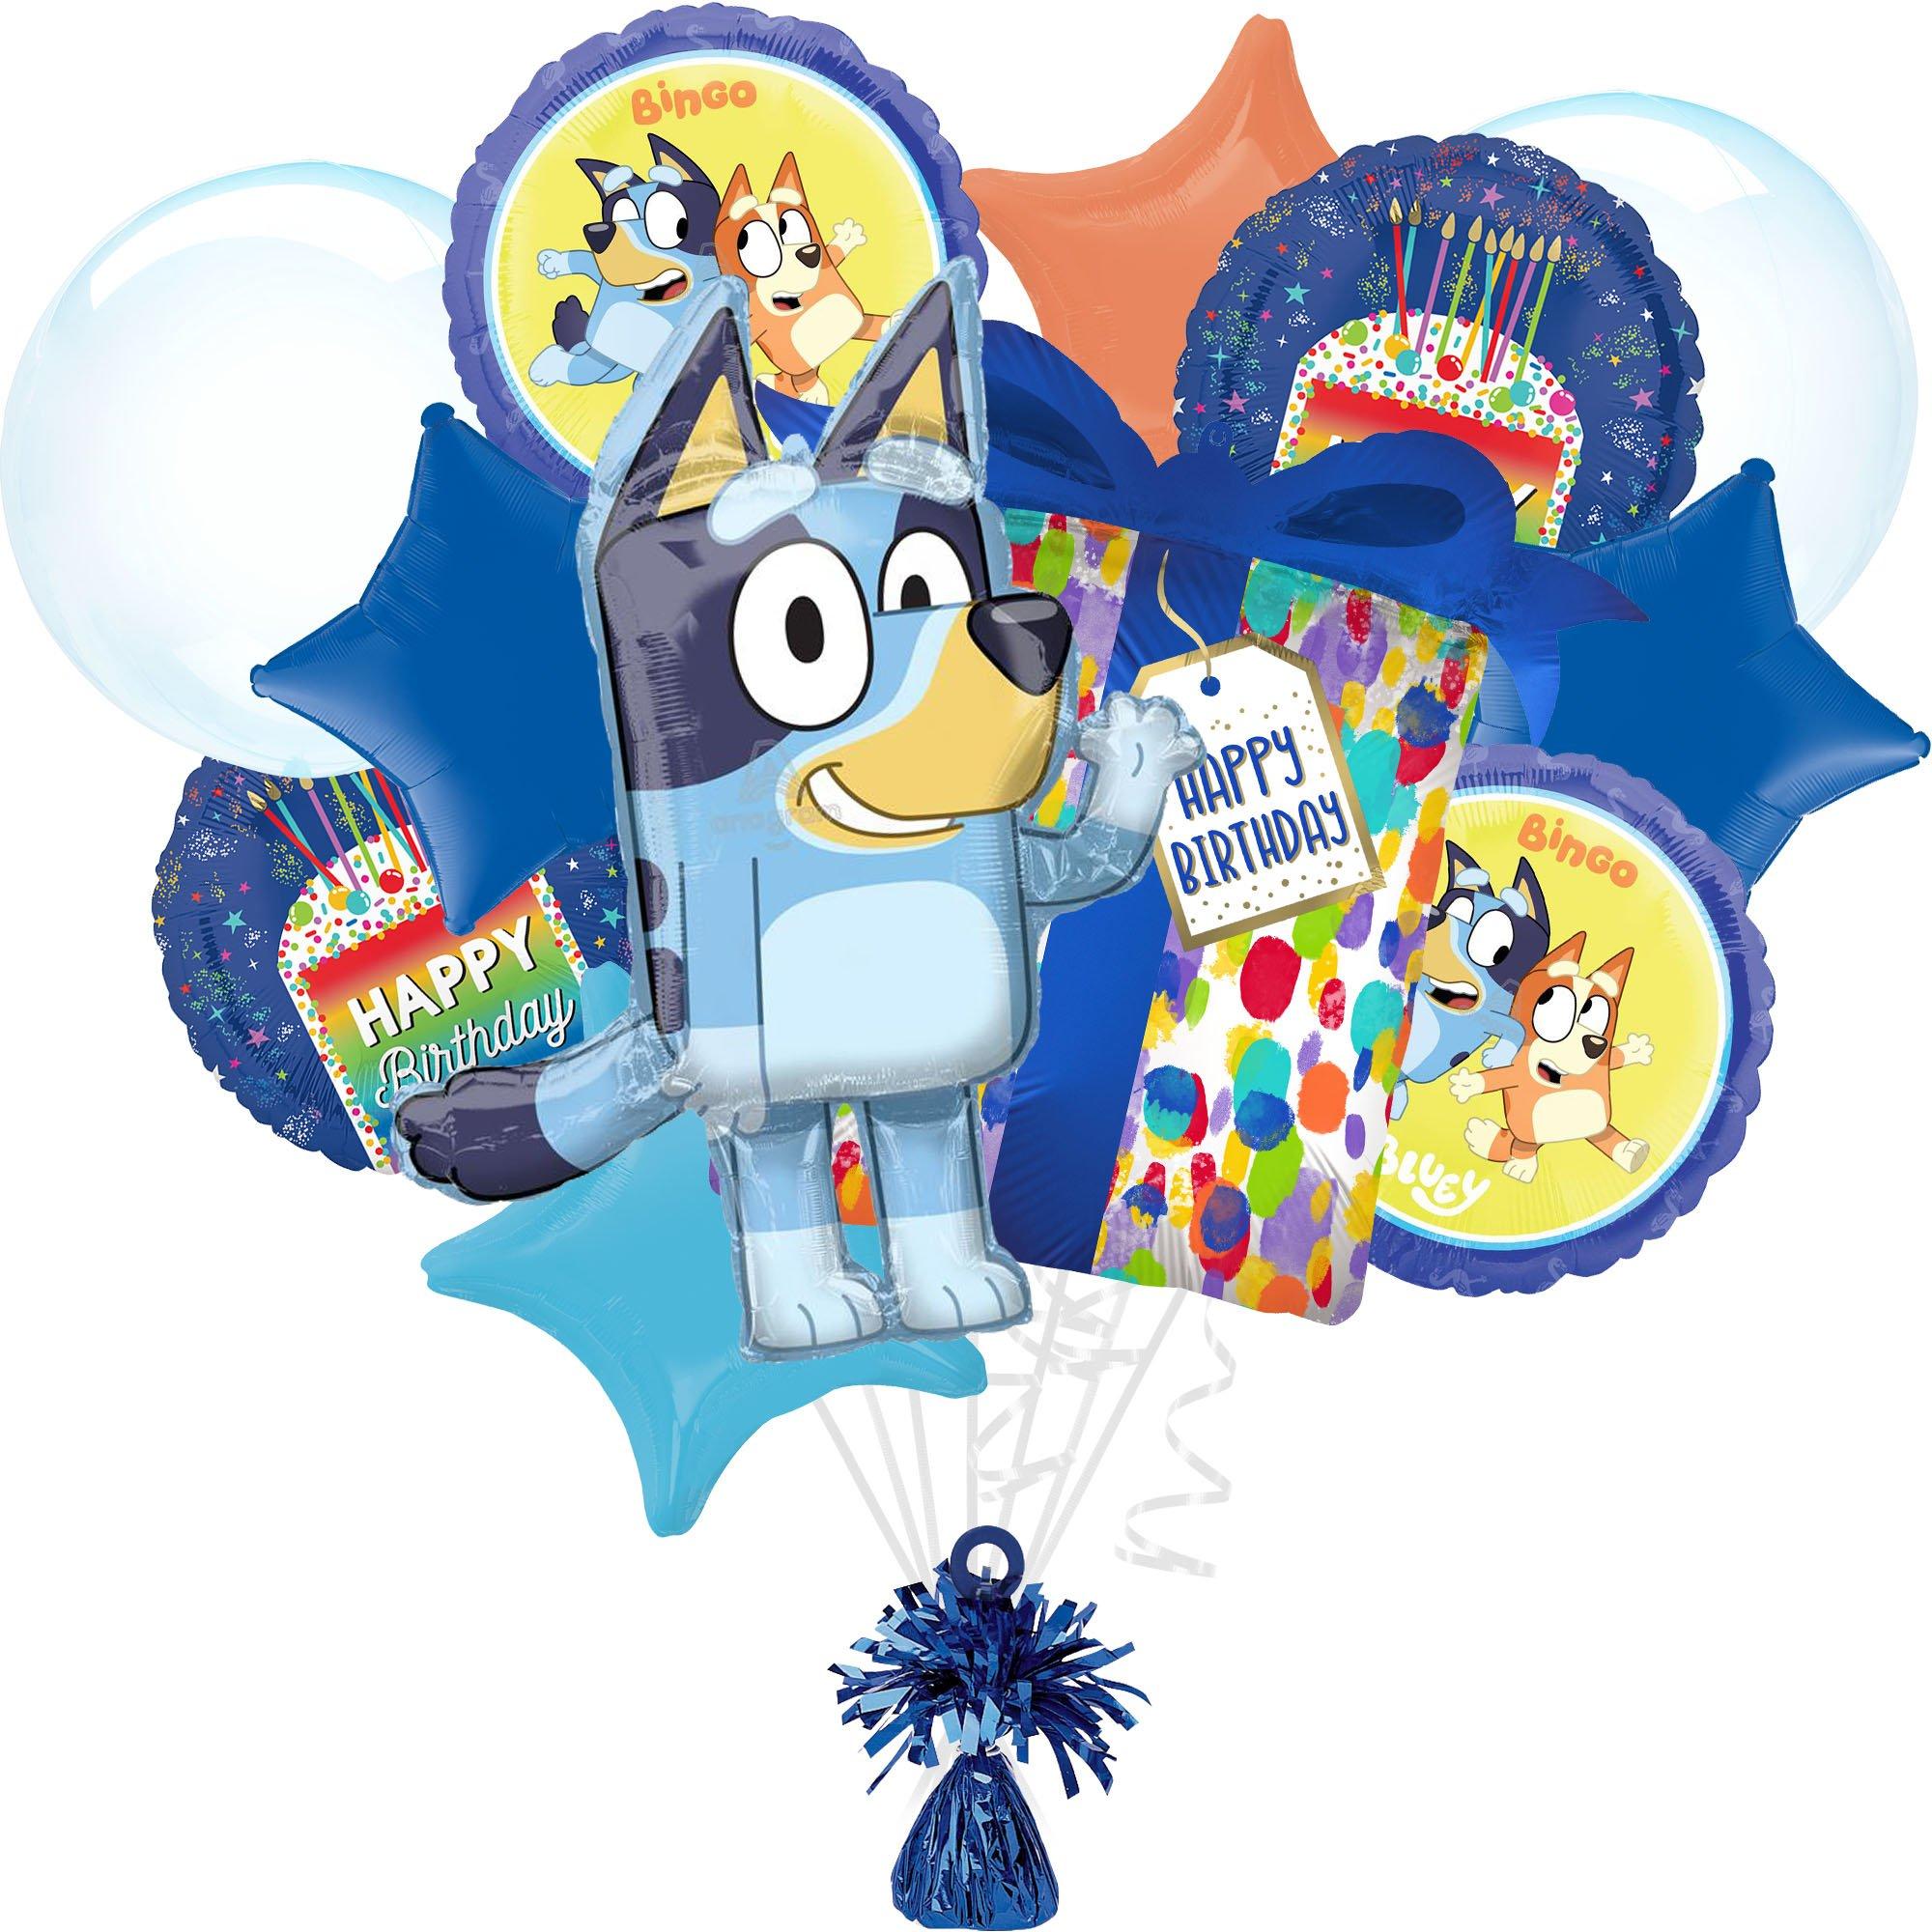 Party City Bluey Decorating Kit Birthday Party Supplies | Birthday Party Supplies